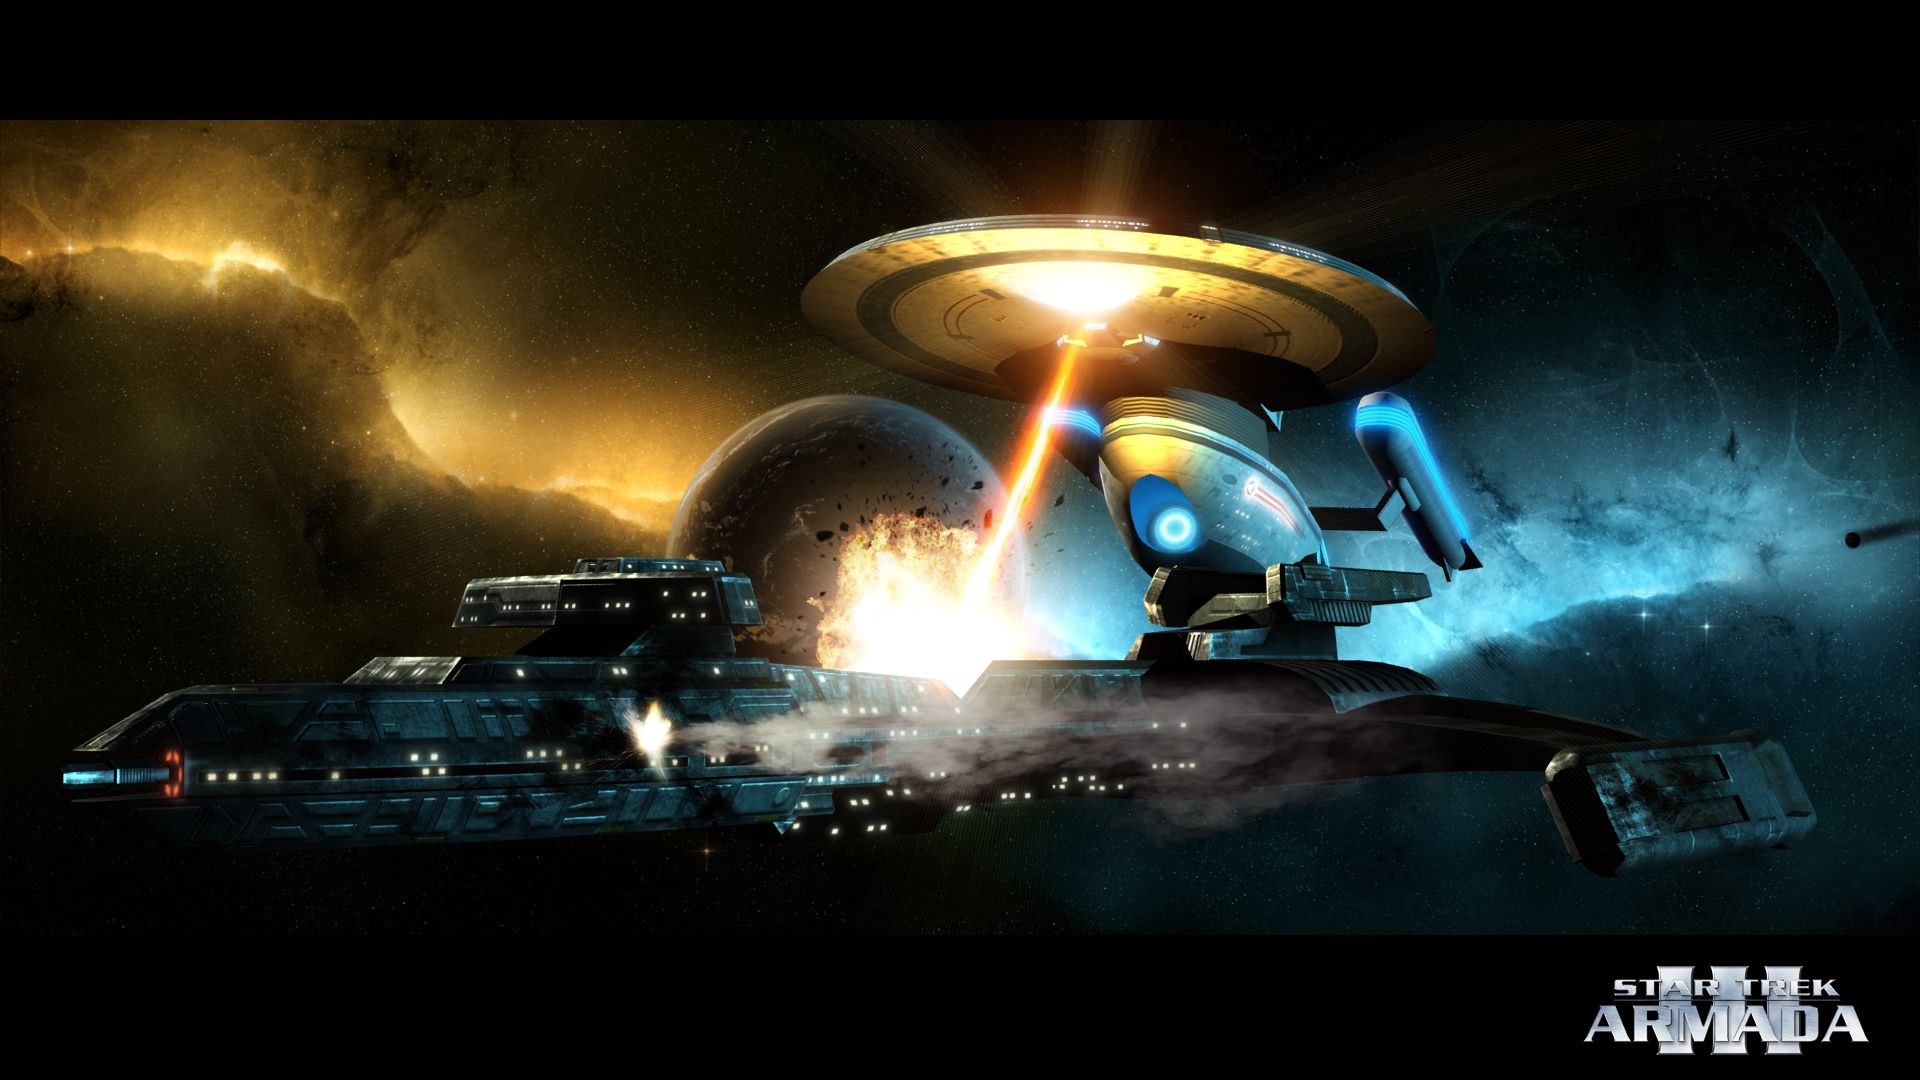 New wallpaper image - Star Trek: Armada 3 mod for Sins of a Solar ...